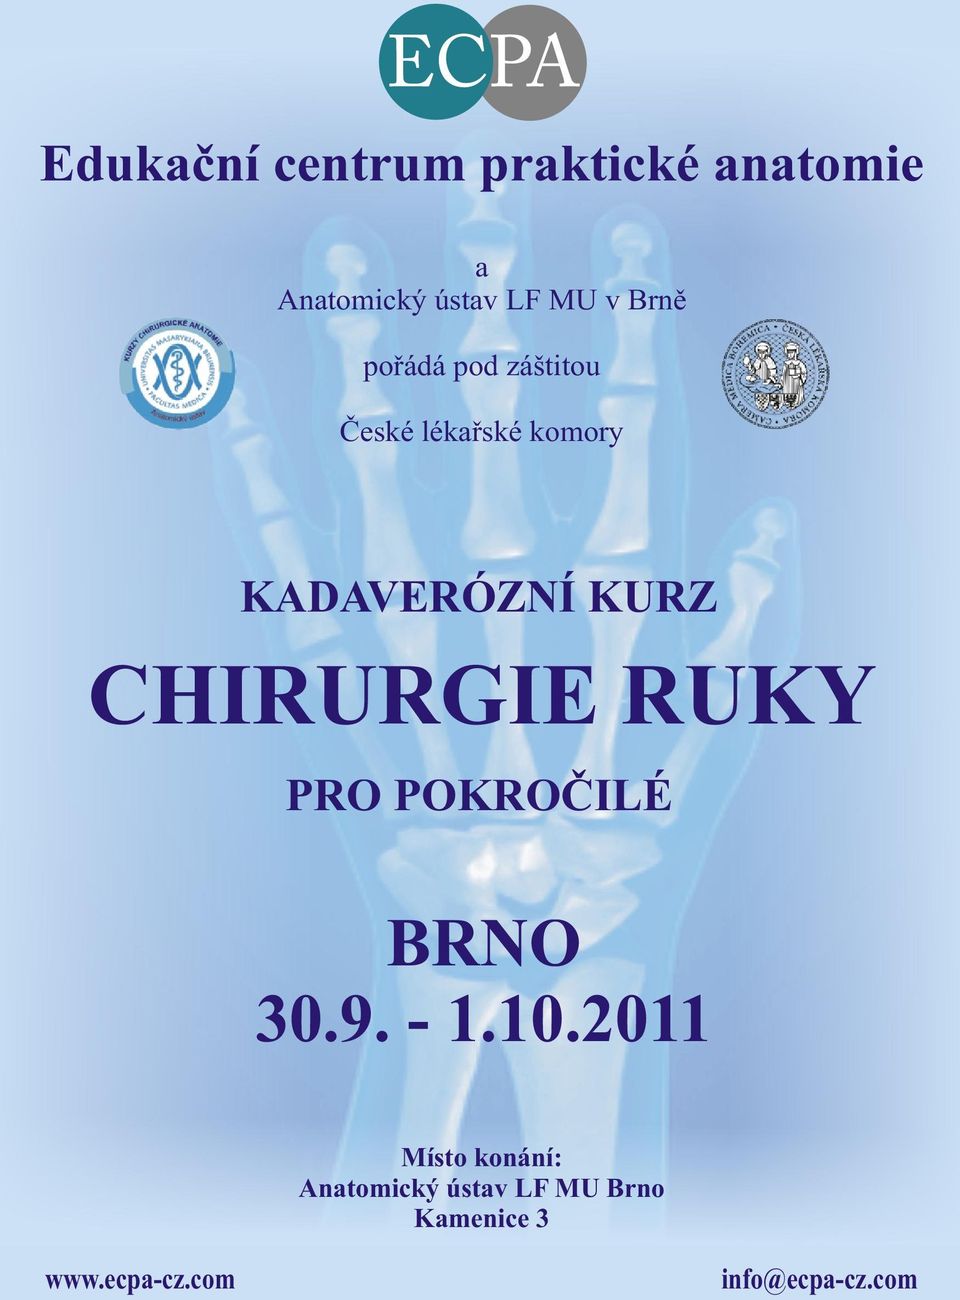 CHIRURGIE RUKY PRO POKROÈILÉ BRNO 30.9. - 1.10.